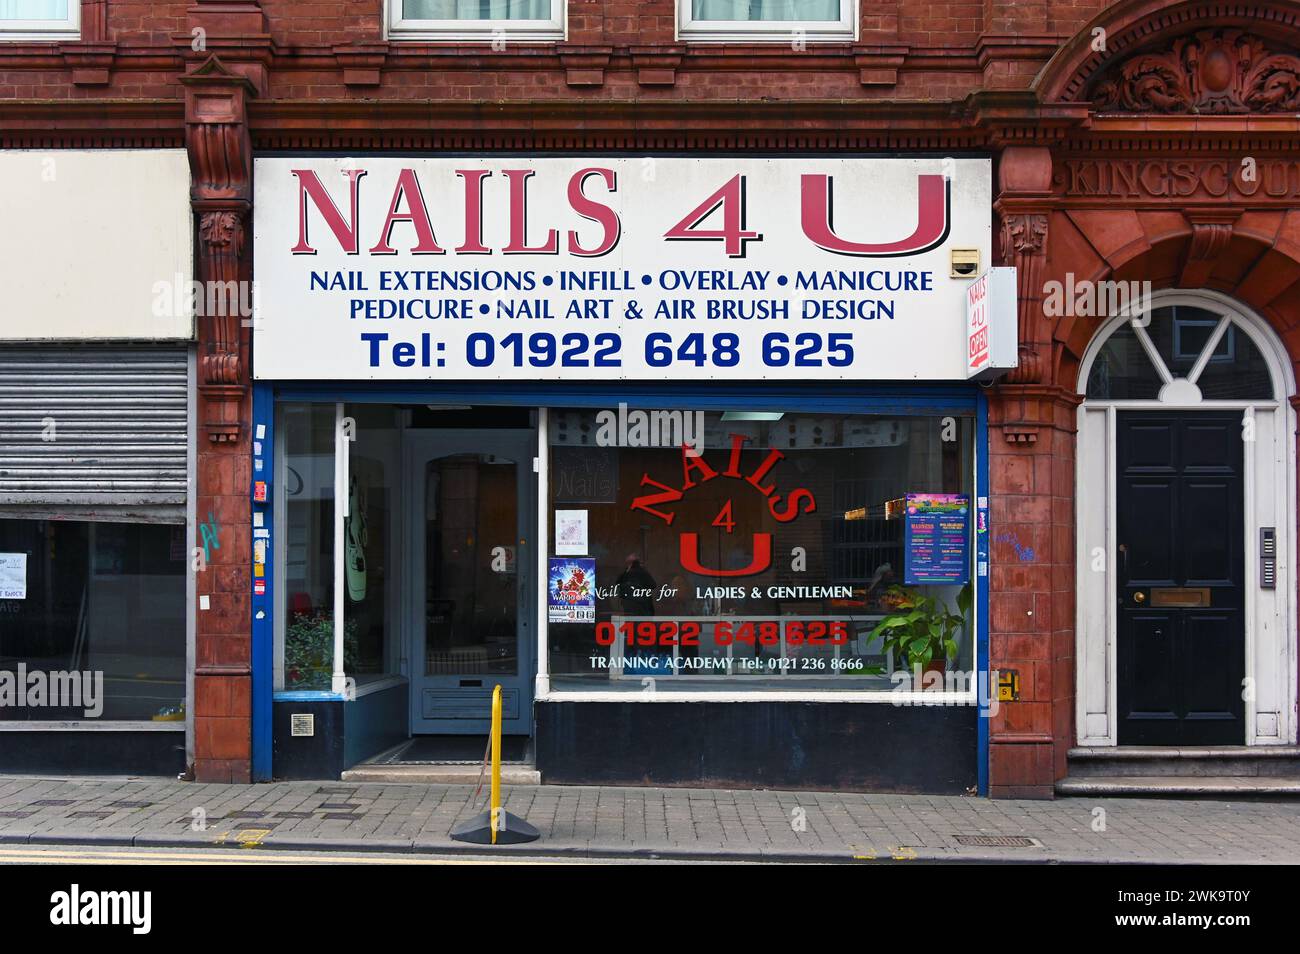 nails 4 u nail salon bridge street walsall west midlands england united kingdom europe 2WK9T0Y